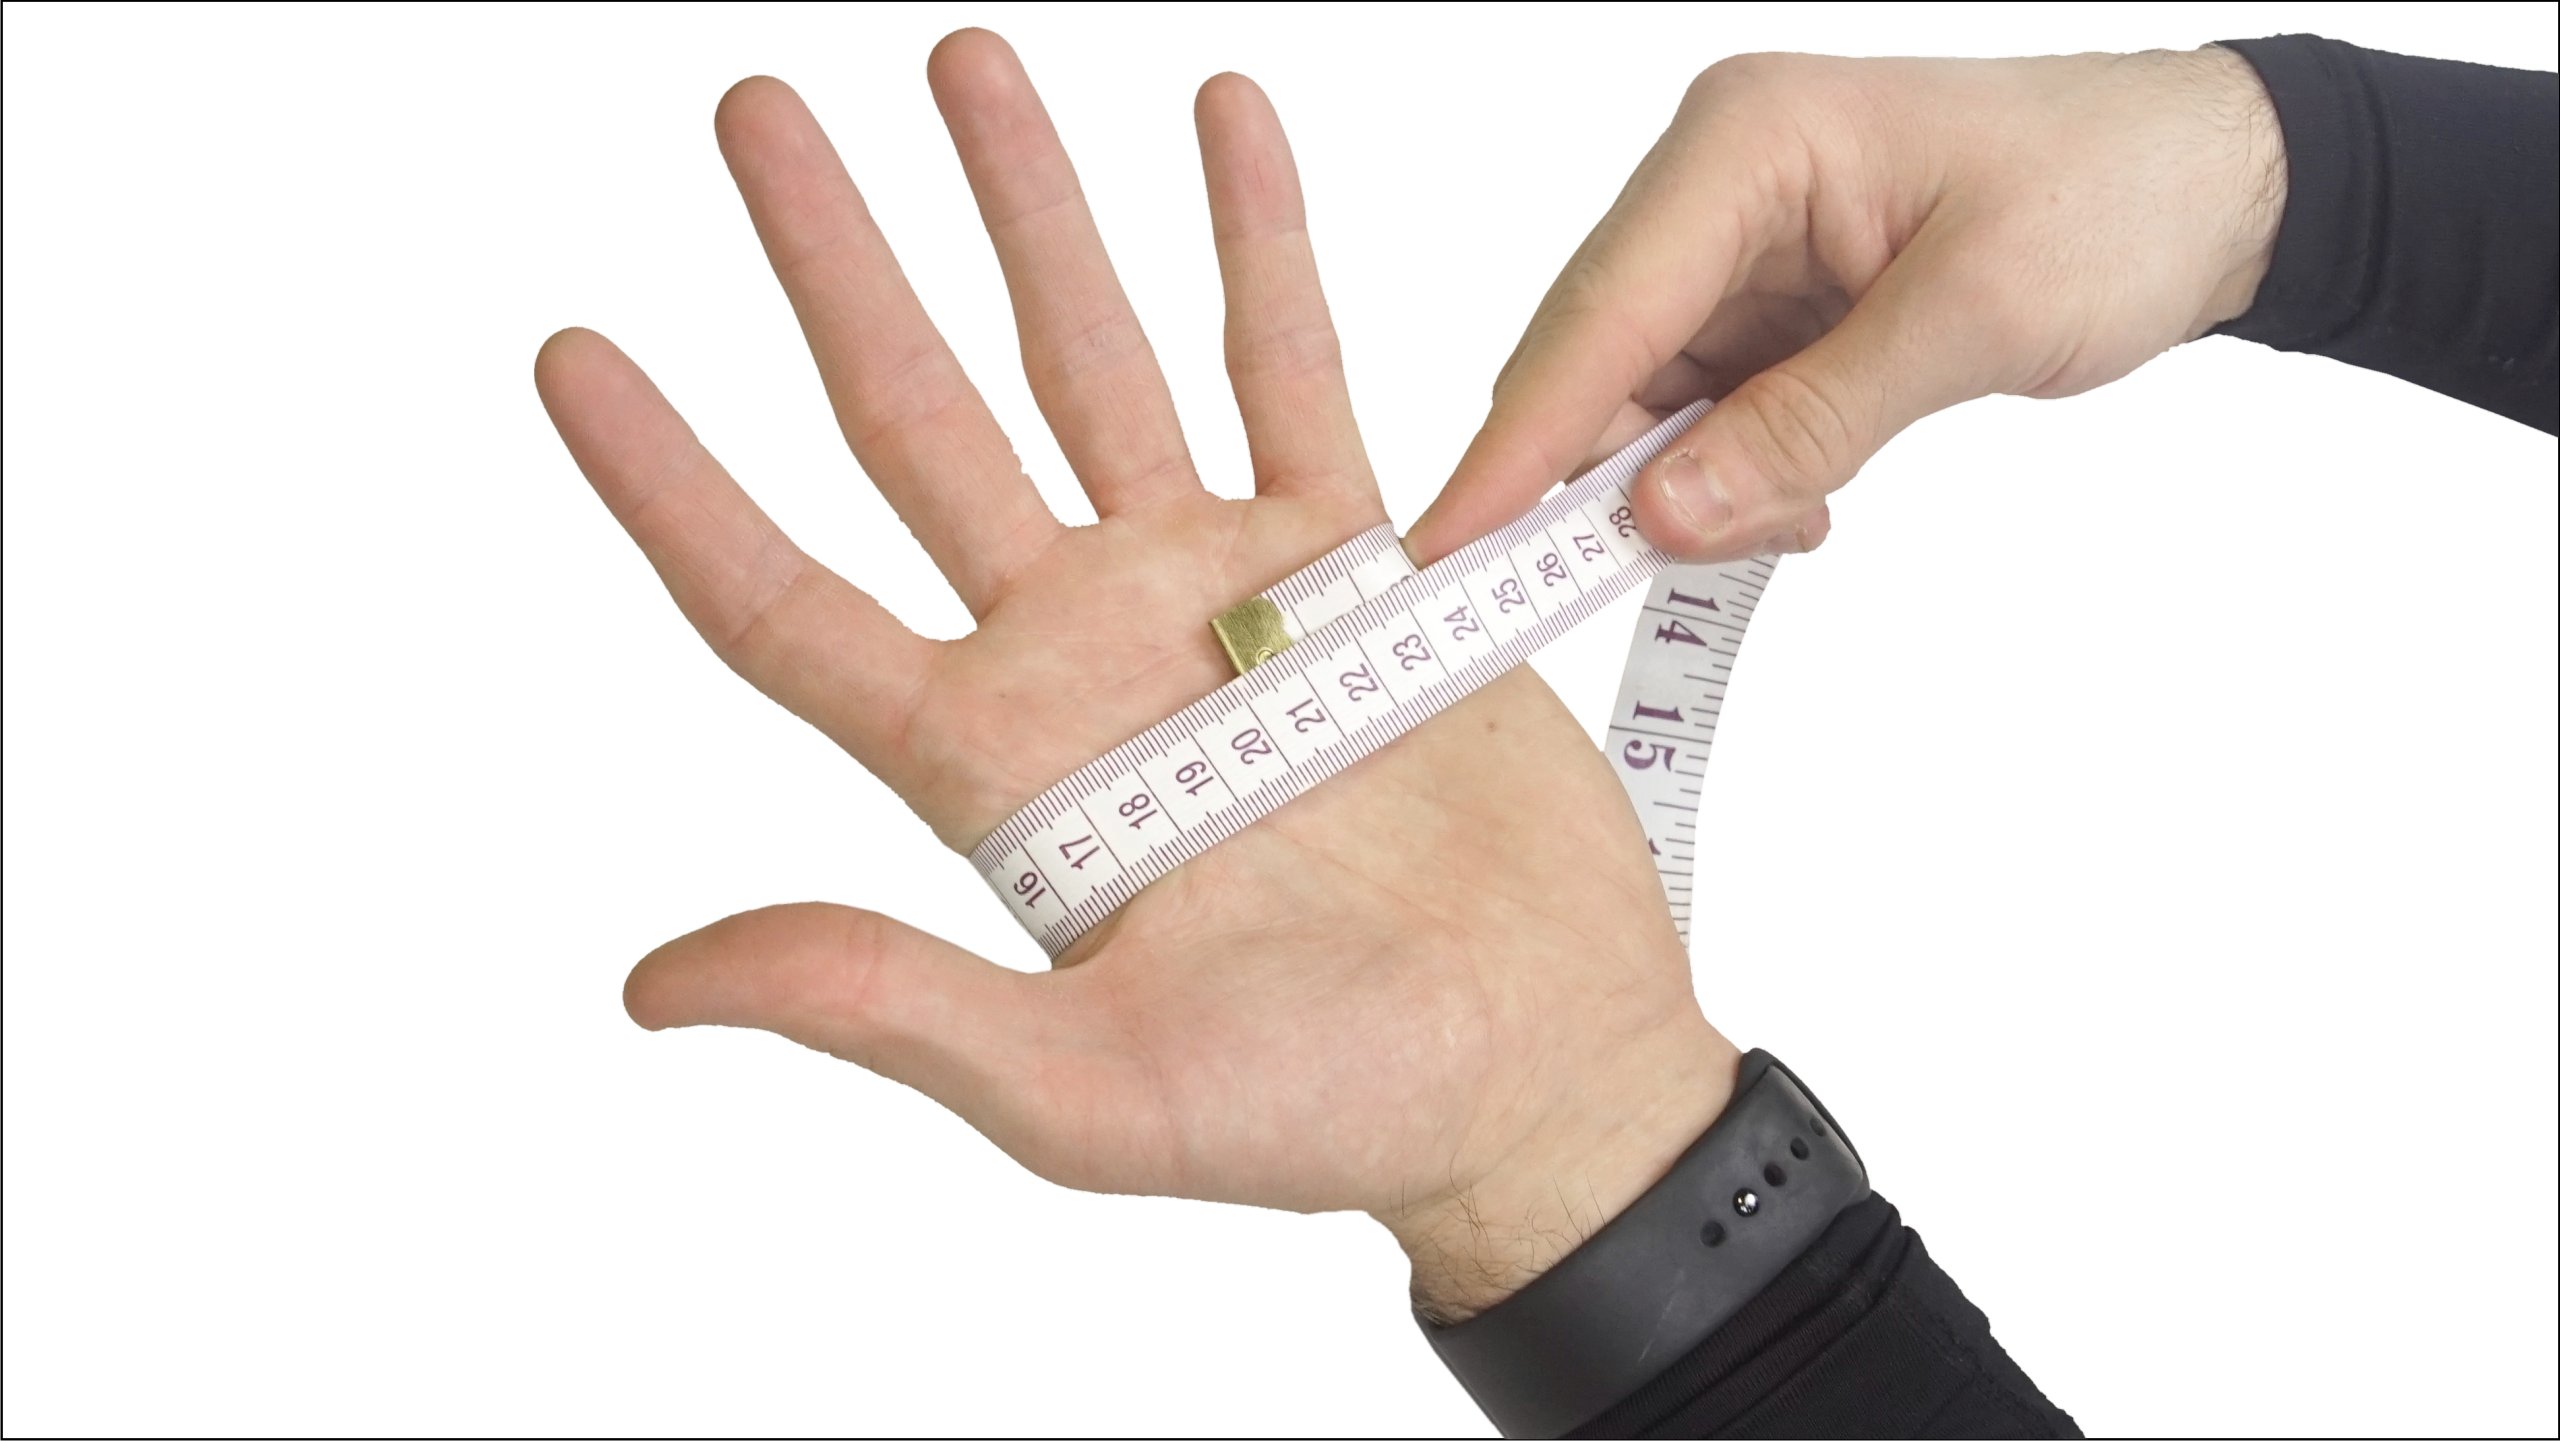 Hand measurement